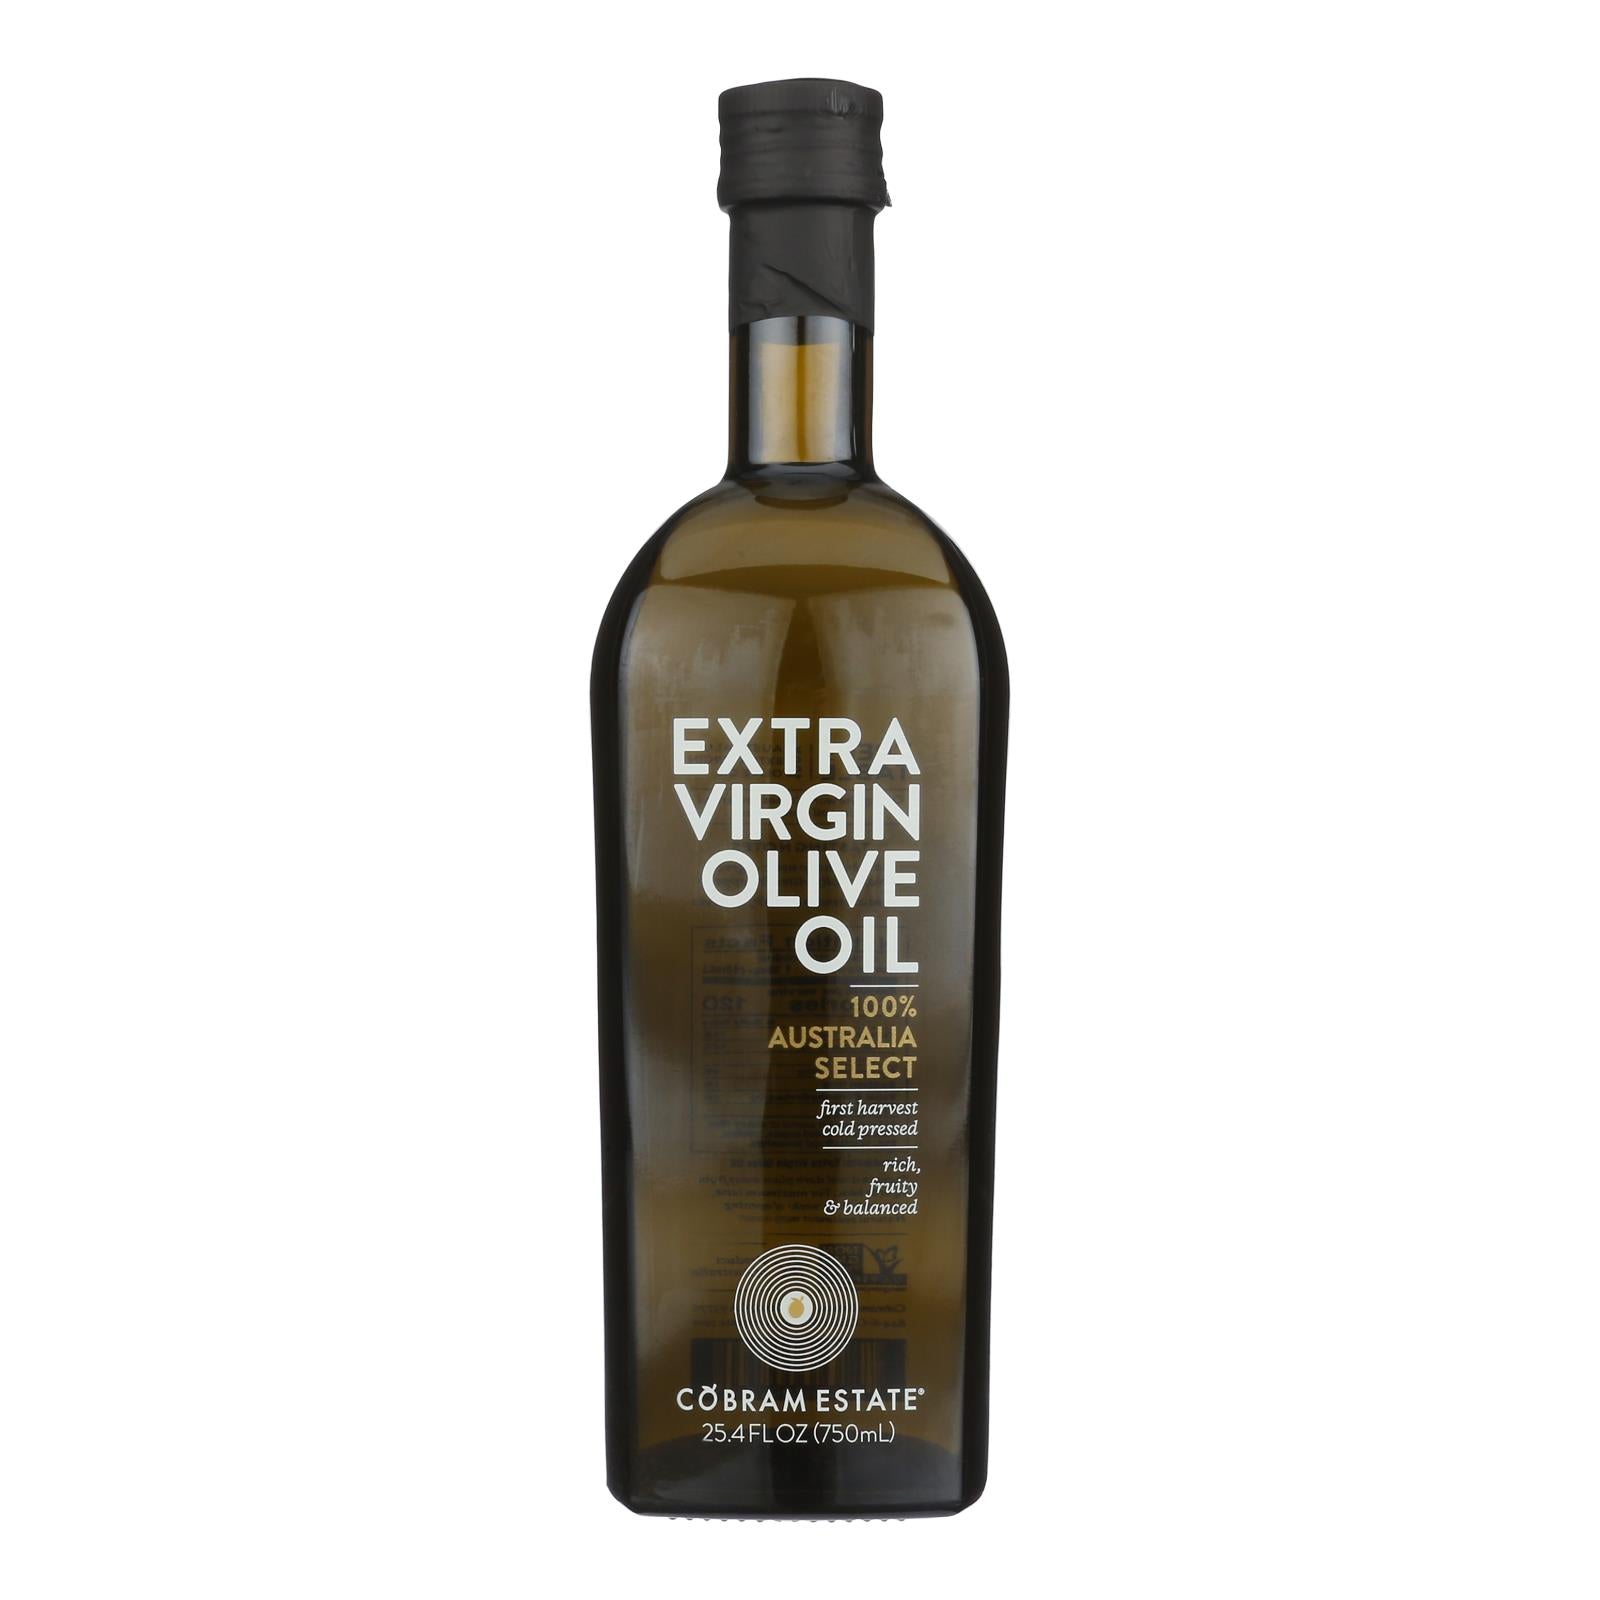 Cobram Estates Extra Virgin Olive Oil - Australia Select - Case Of 6 - 25.4 Fl Oz.